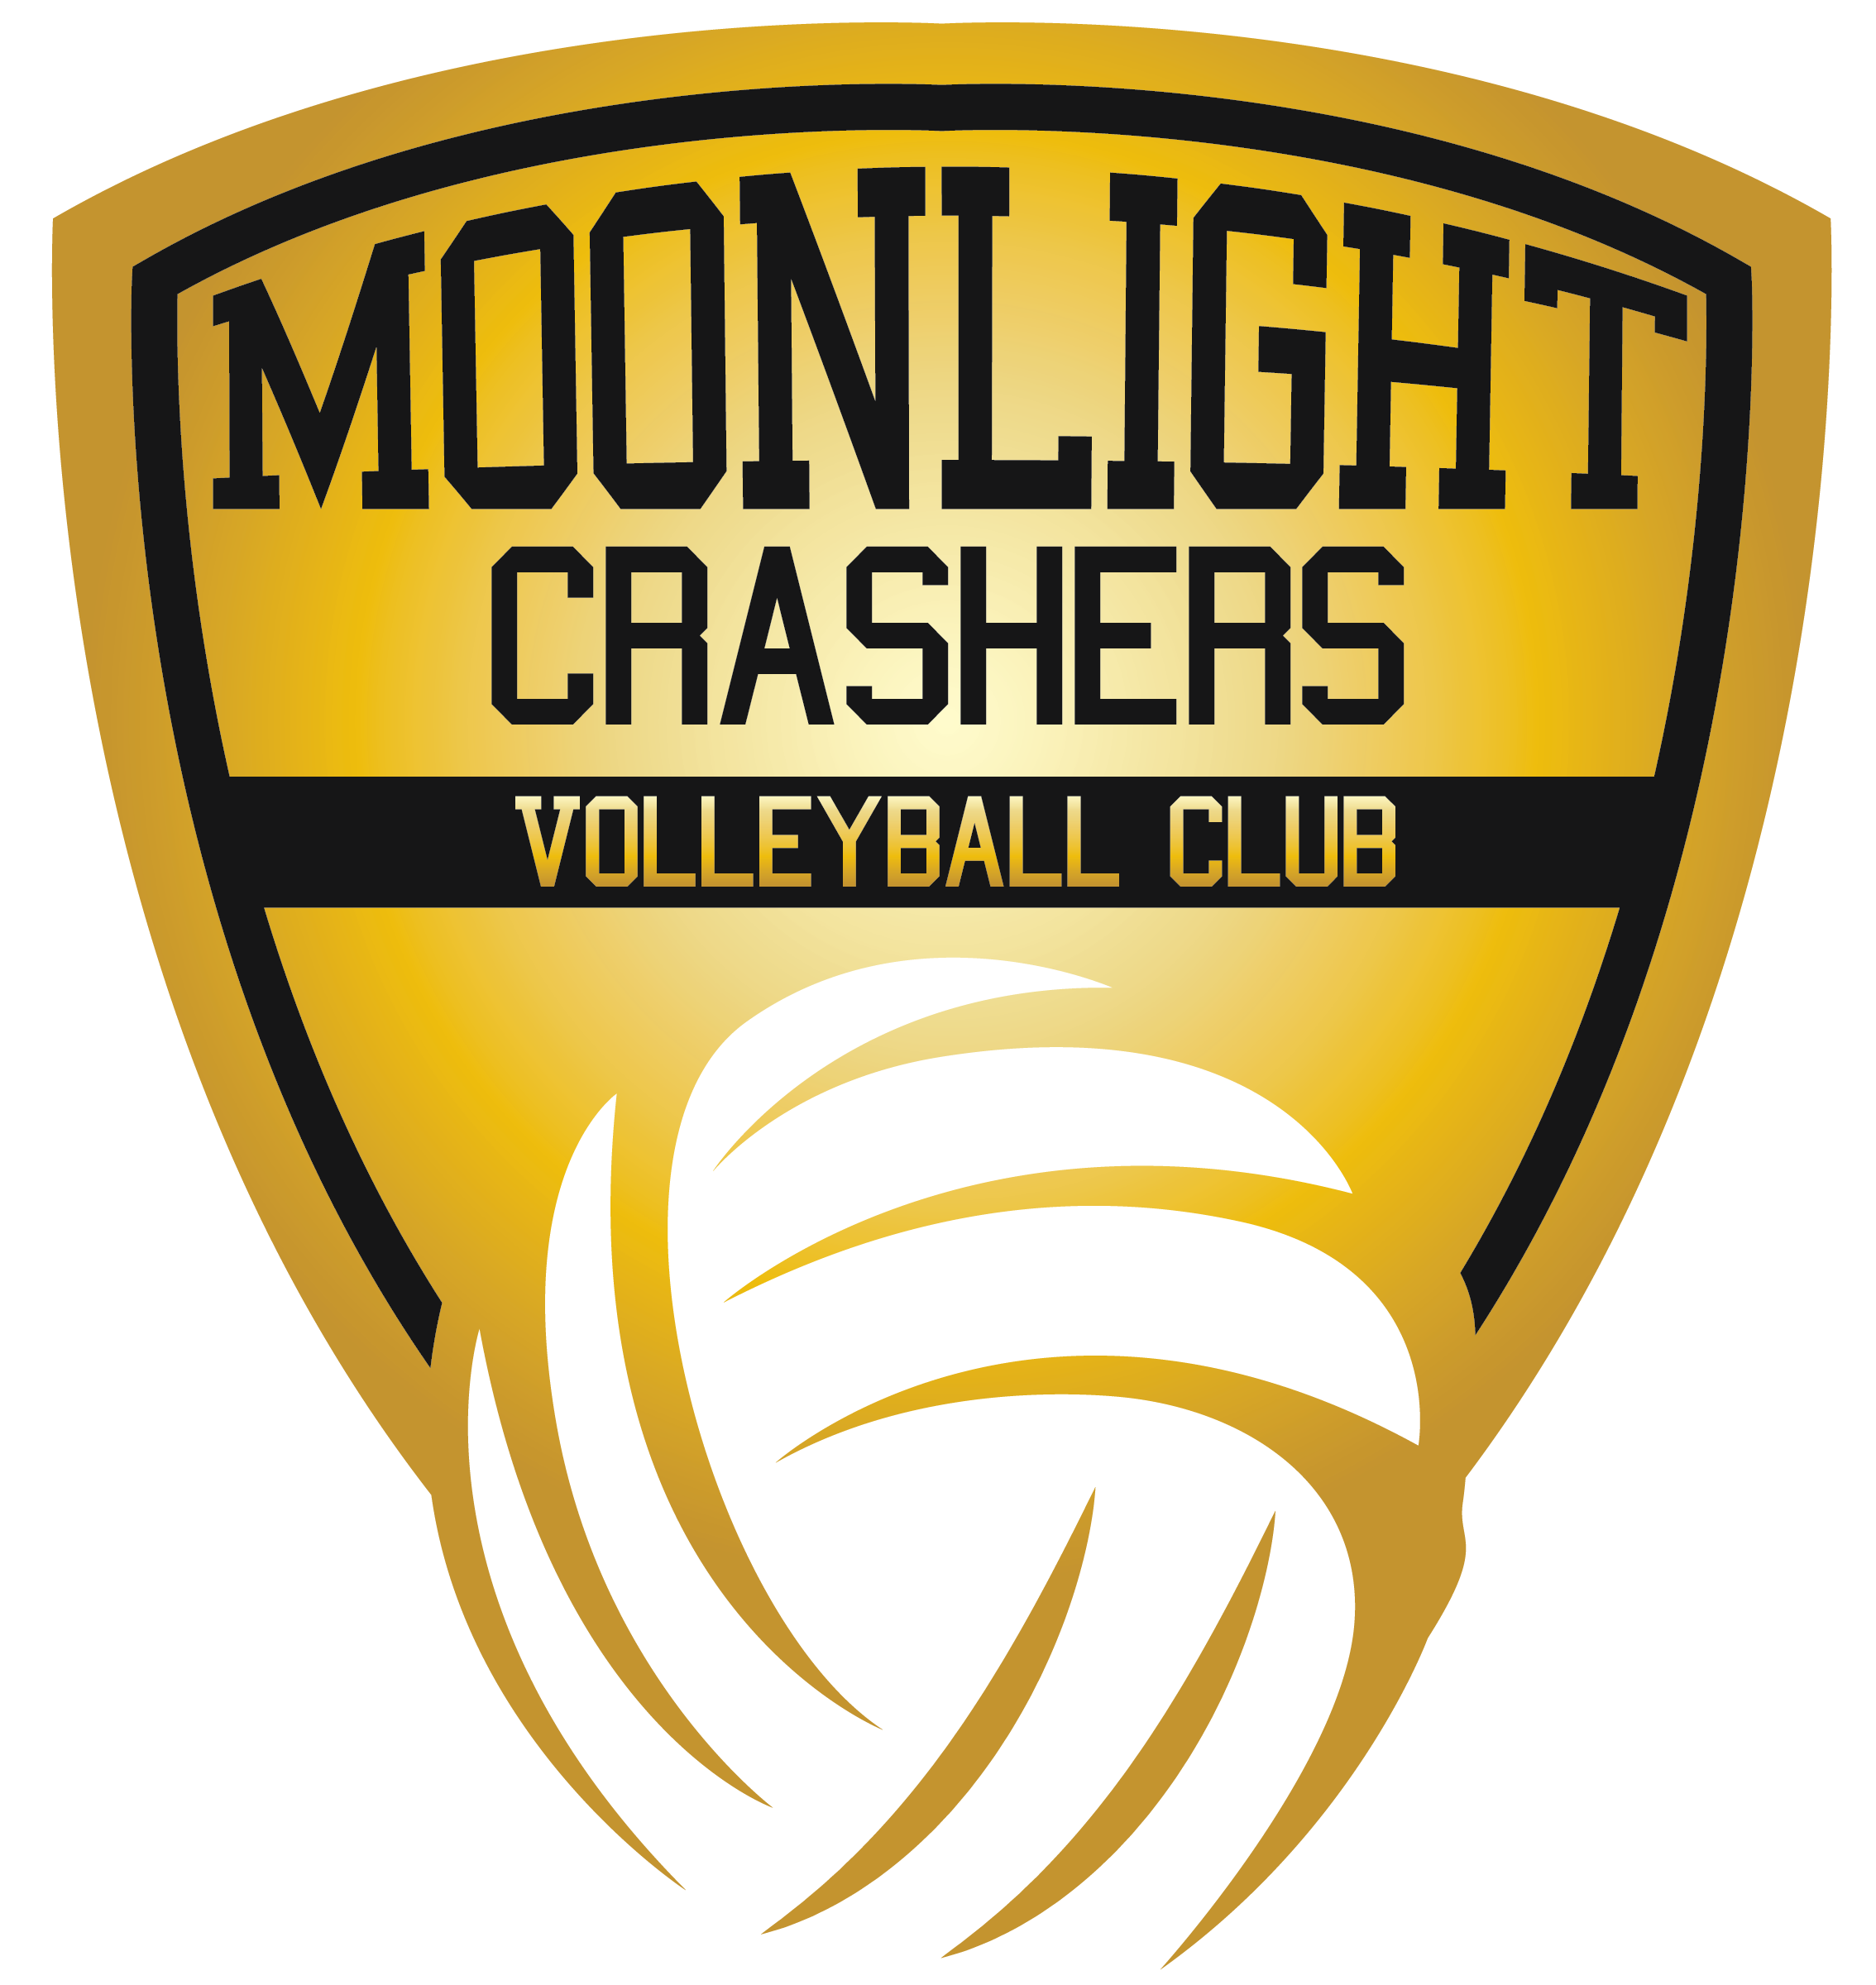 Moonlight Crashers Volleyball Club